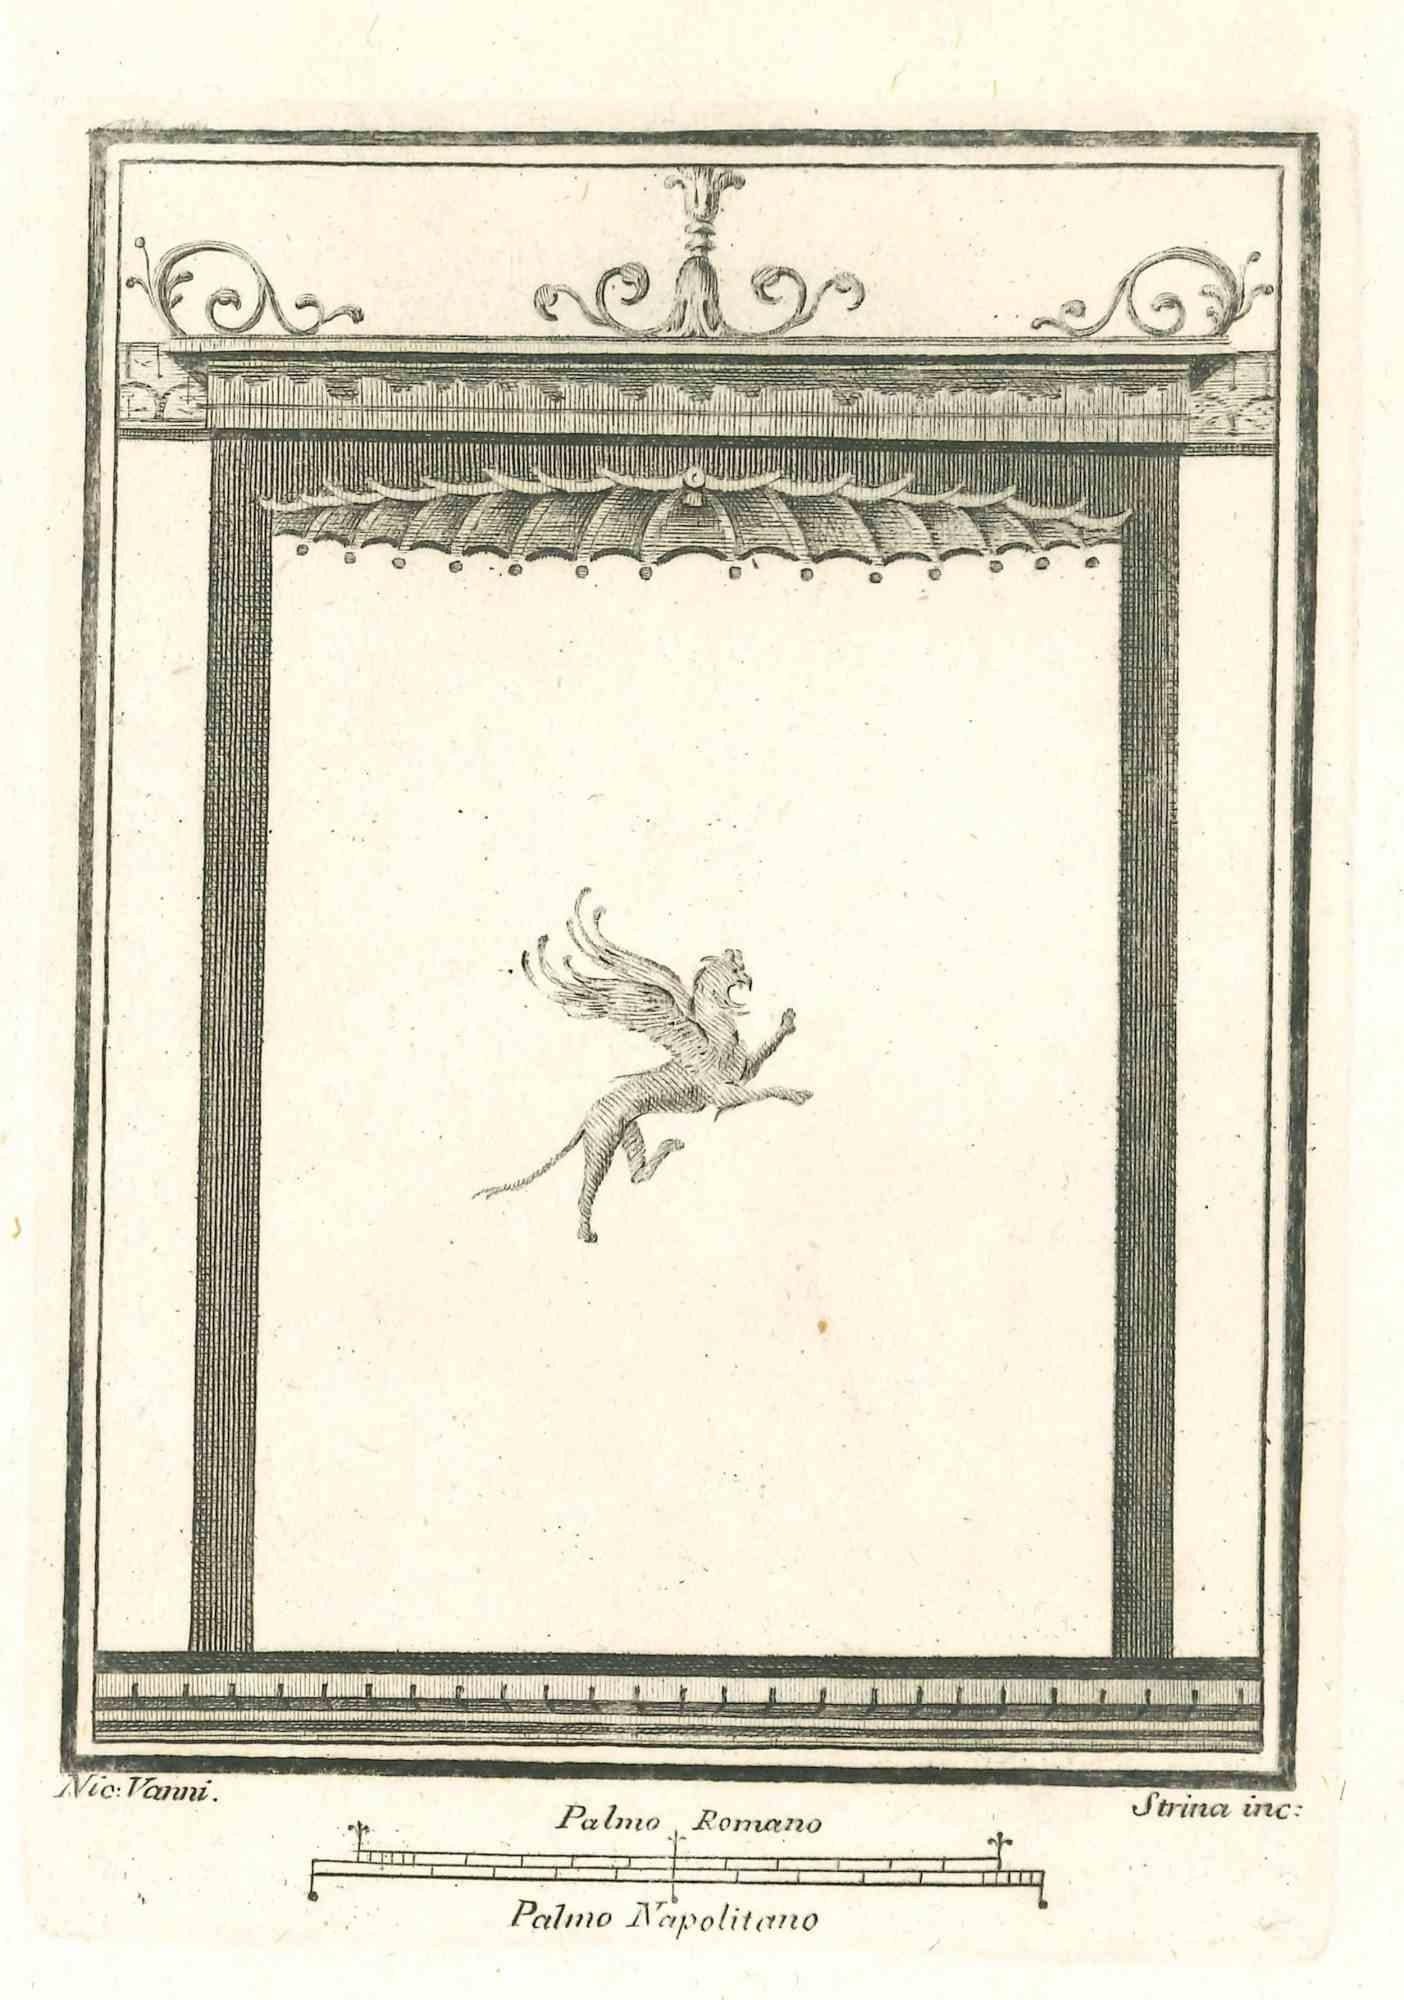 Figurative Print Niccolò Vanni - Scène romaine antique - gravure - XVIIIe siècle